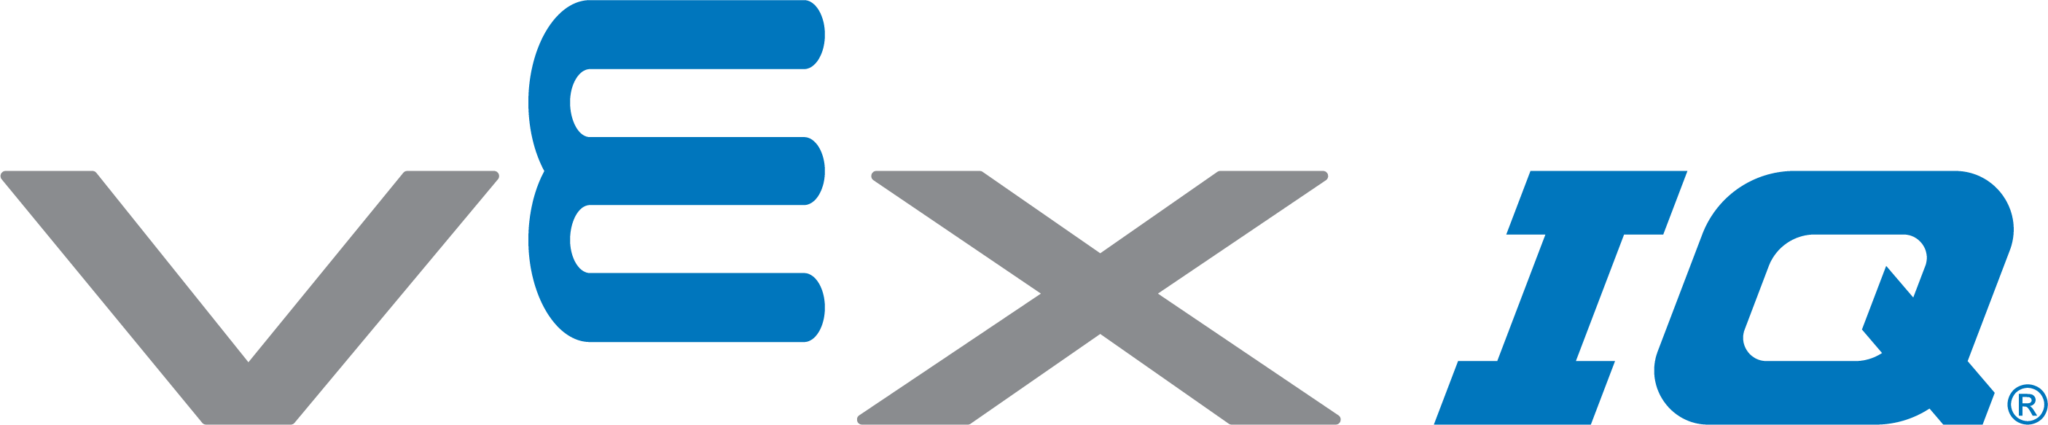 Vex IQ logo in Blue and White